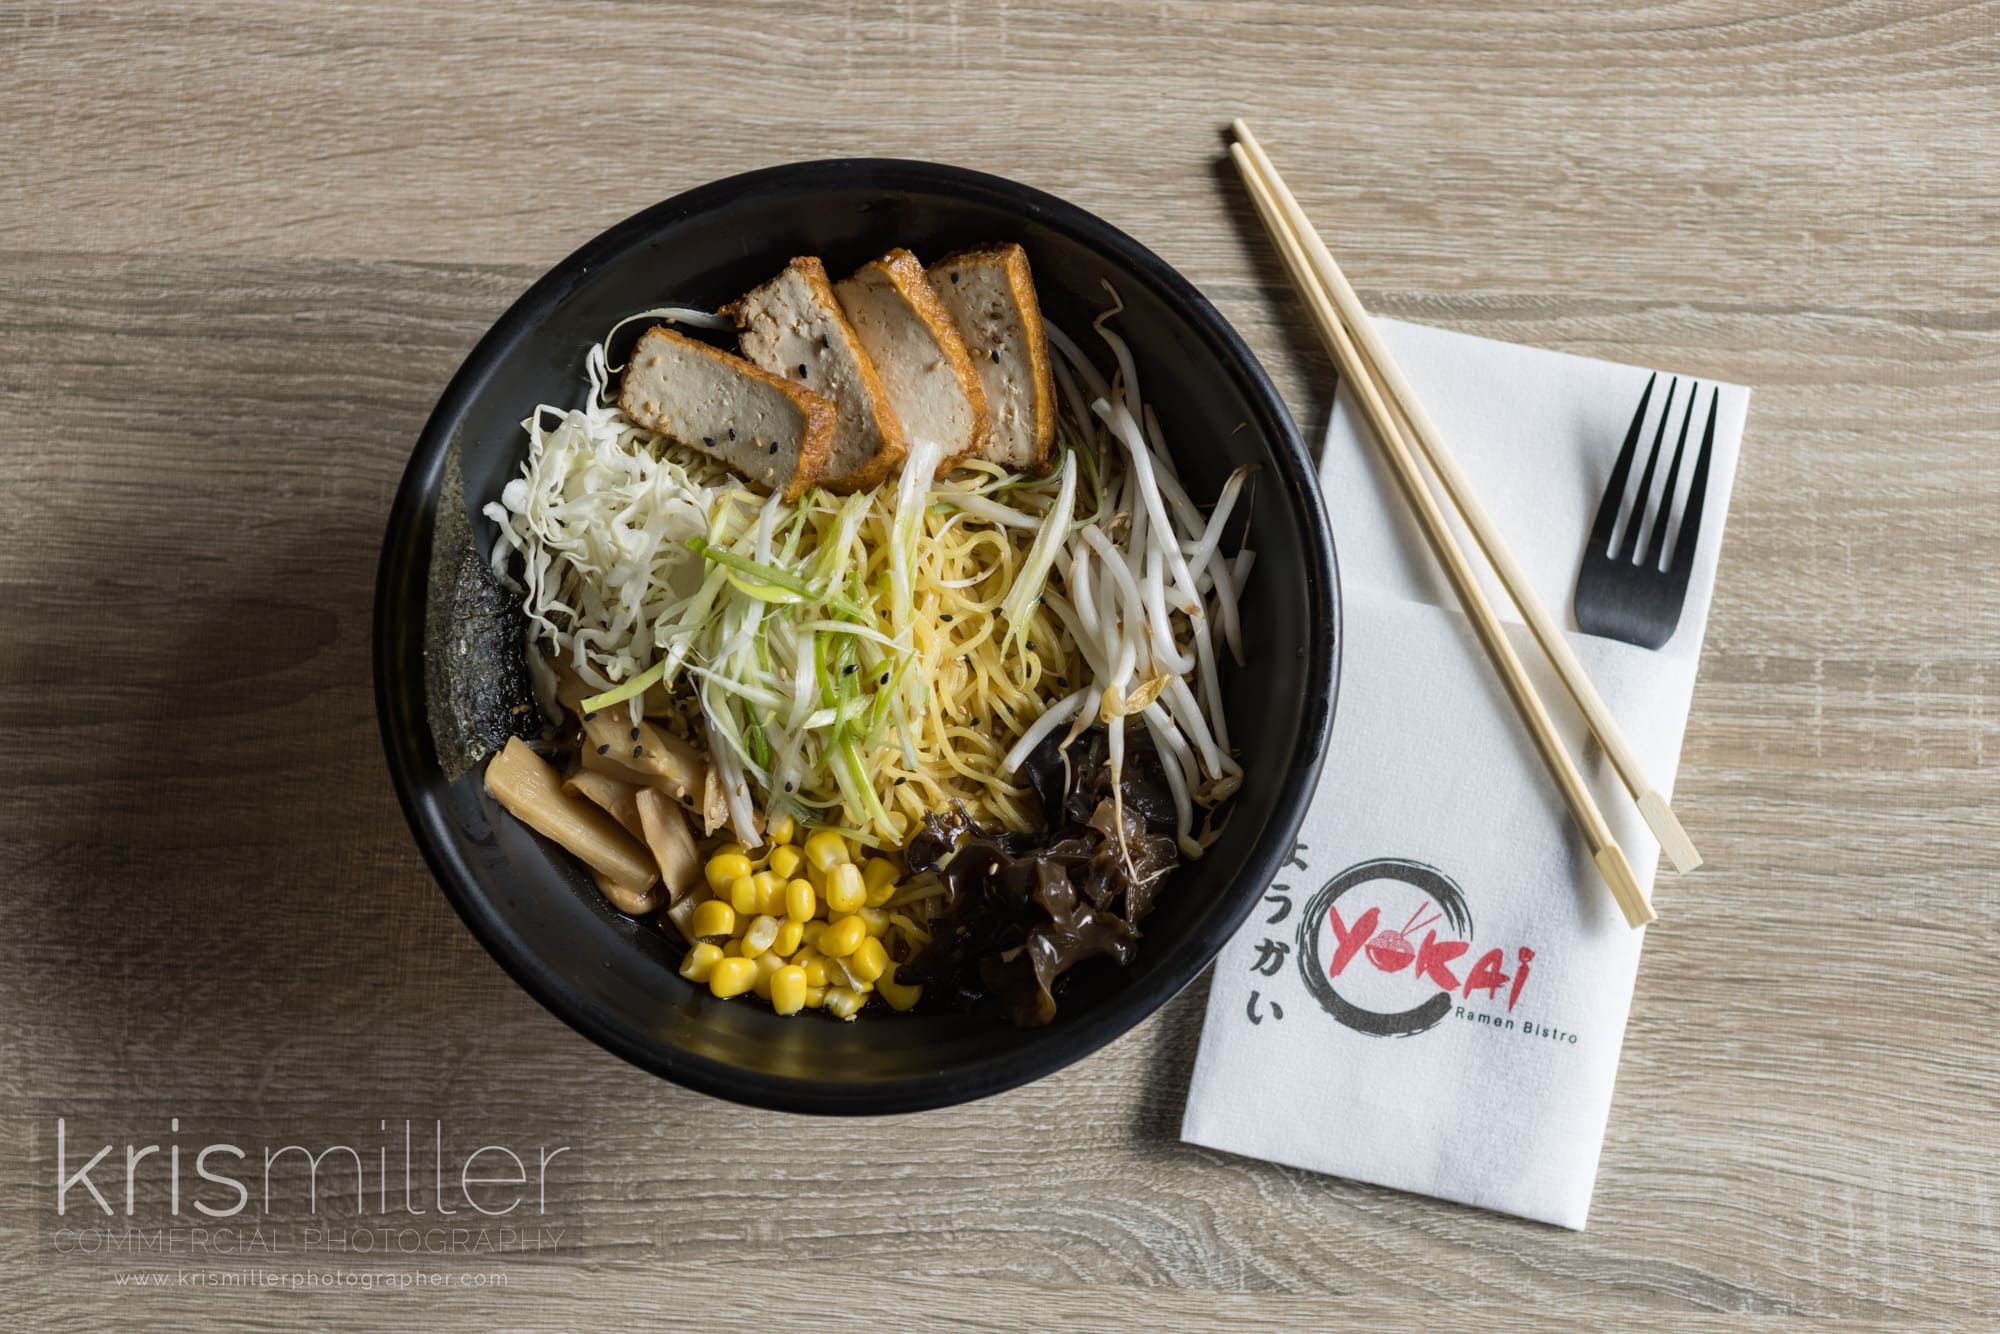 Yokai-Ramen-Bistro-64-Vegetarian-Ramen-Fried-Tofu-WEB